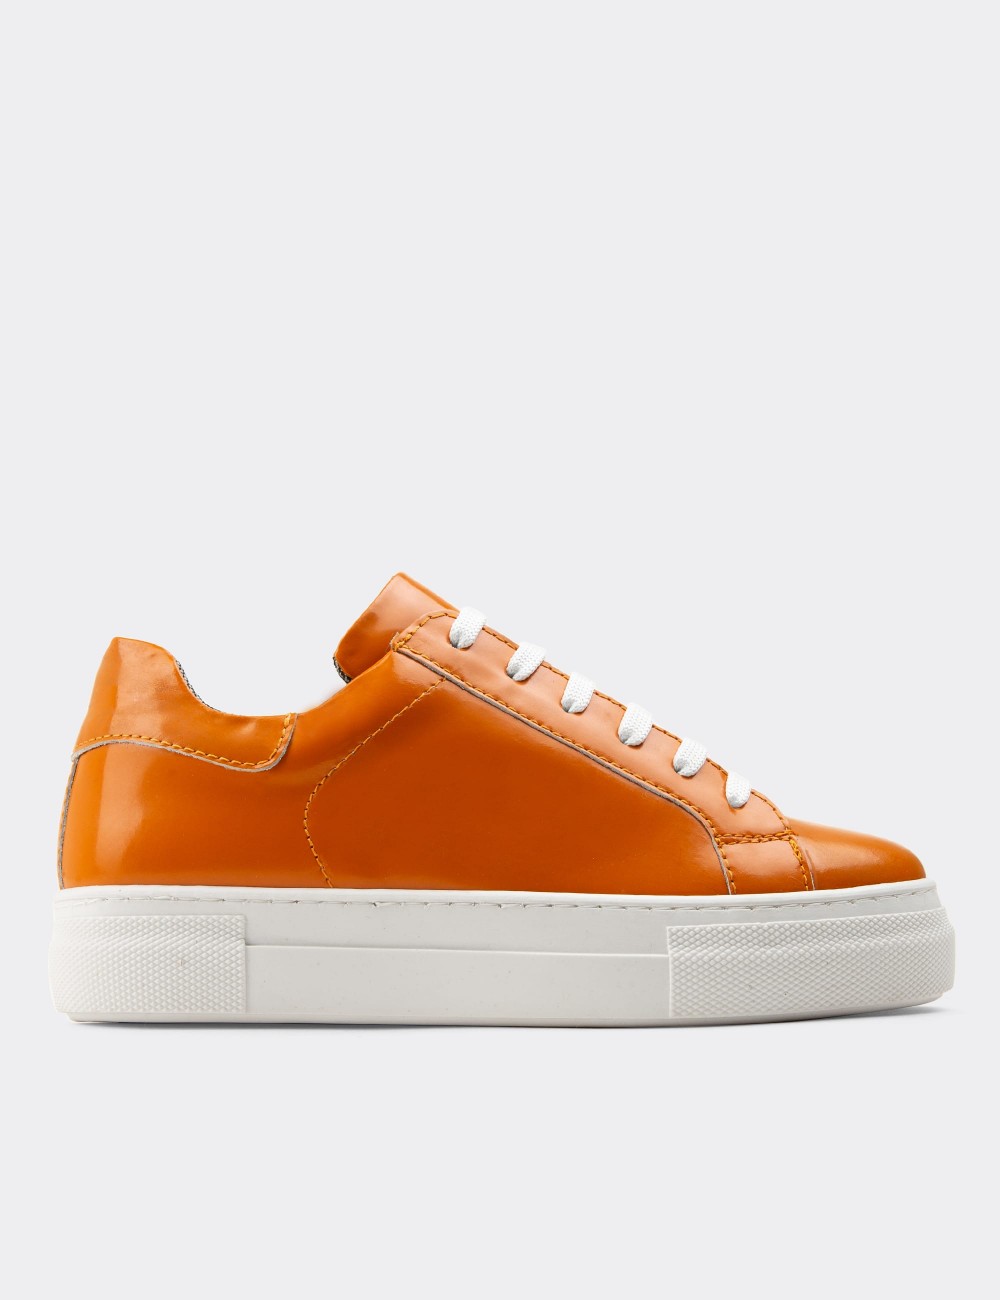 Orange  Leather Sneakers - Z1681ZTRCC02